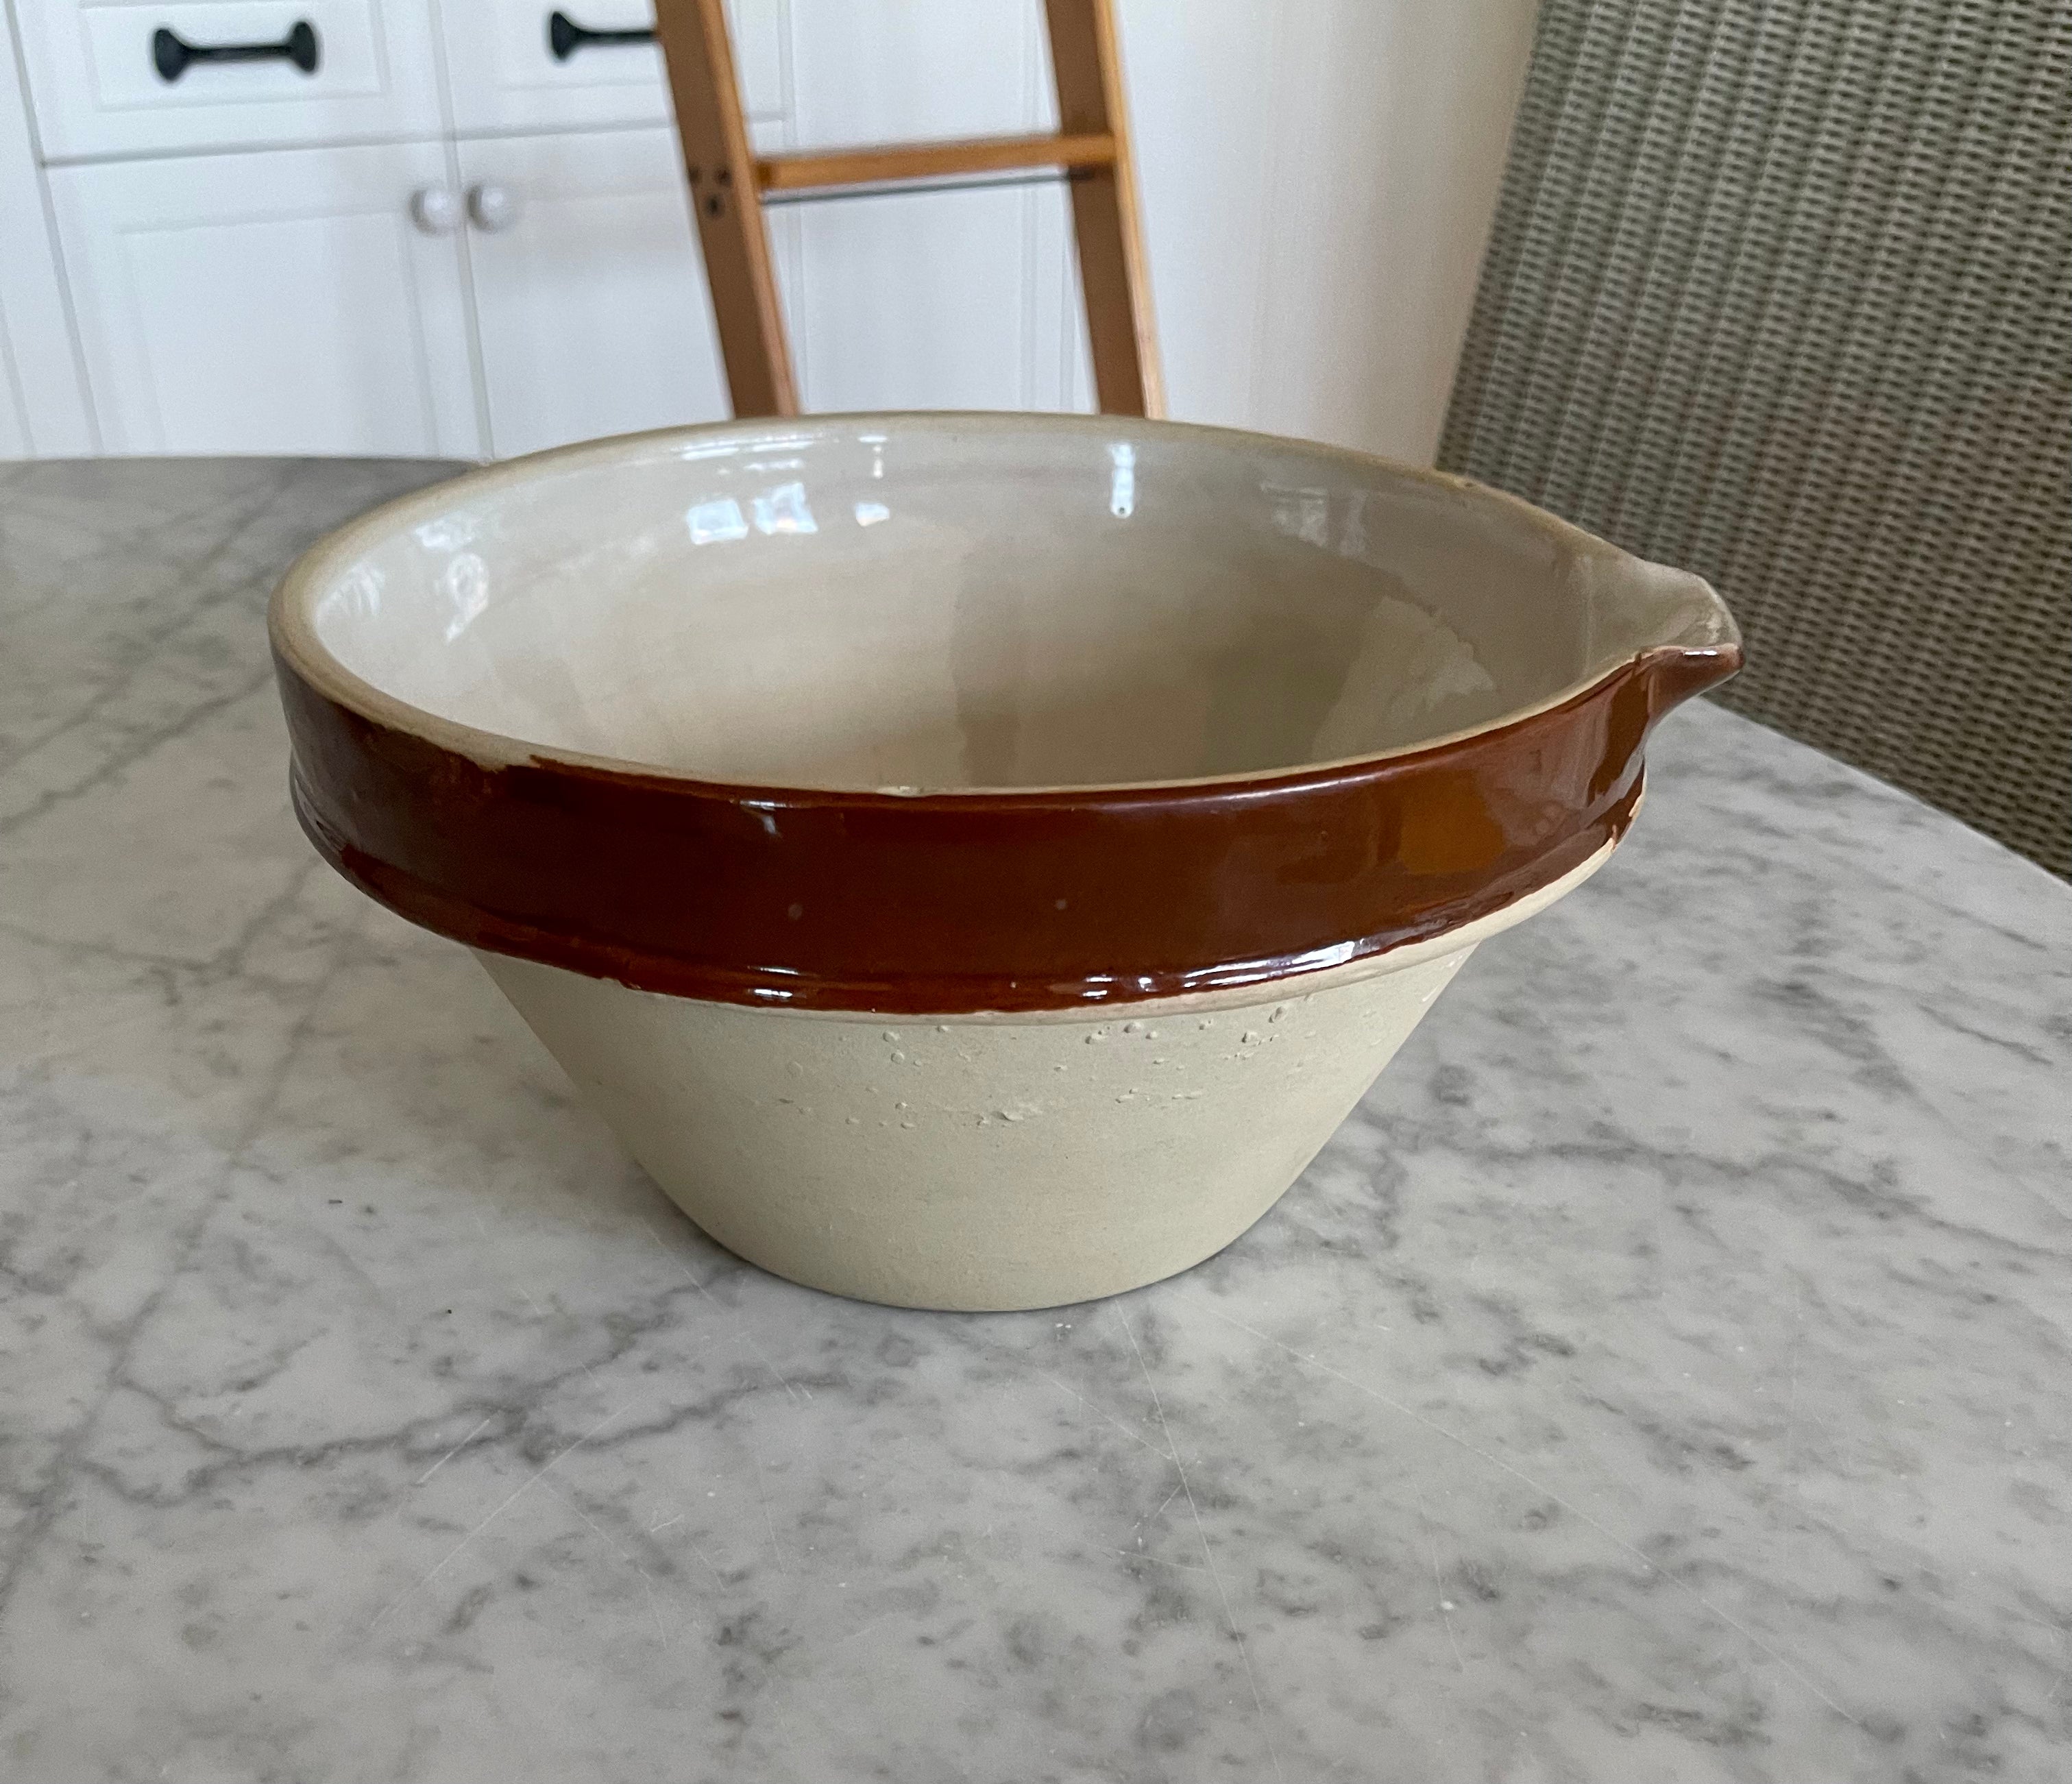 Brown Stoneware Bowl with pour spout- 8